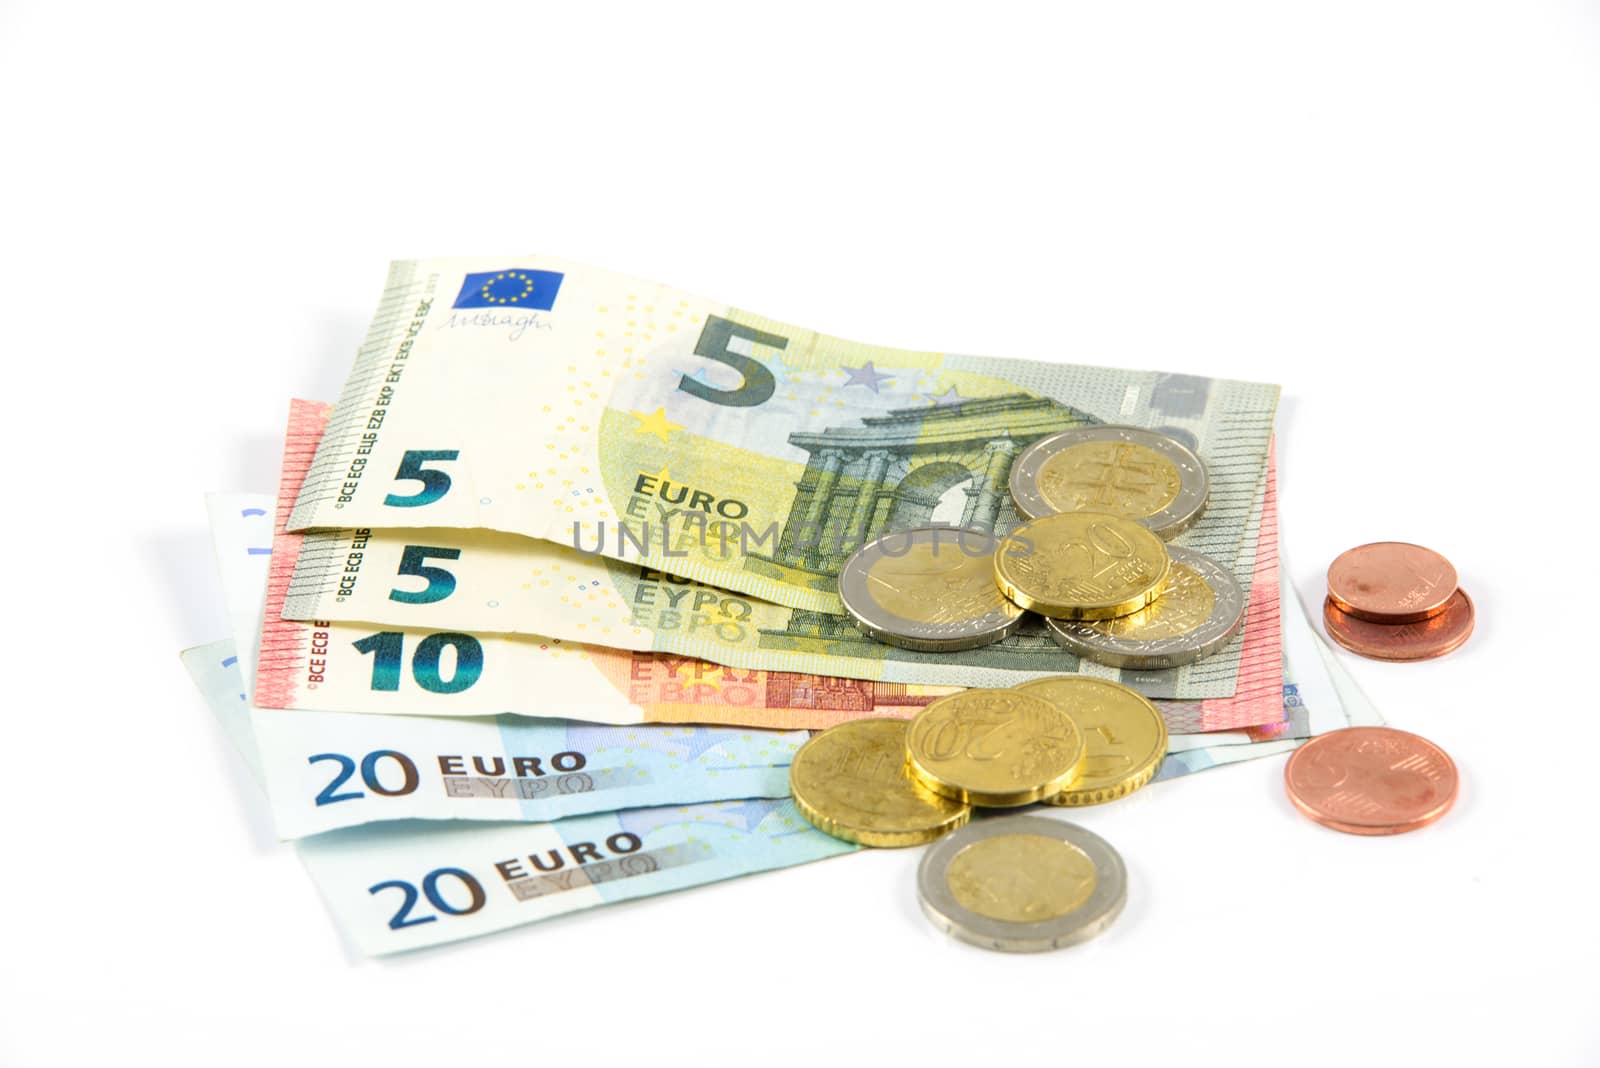 European Union money by wdnet_studio